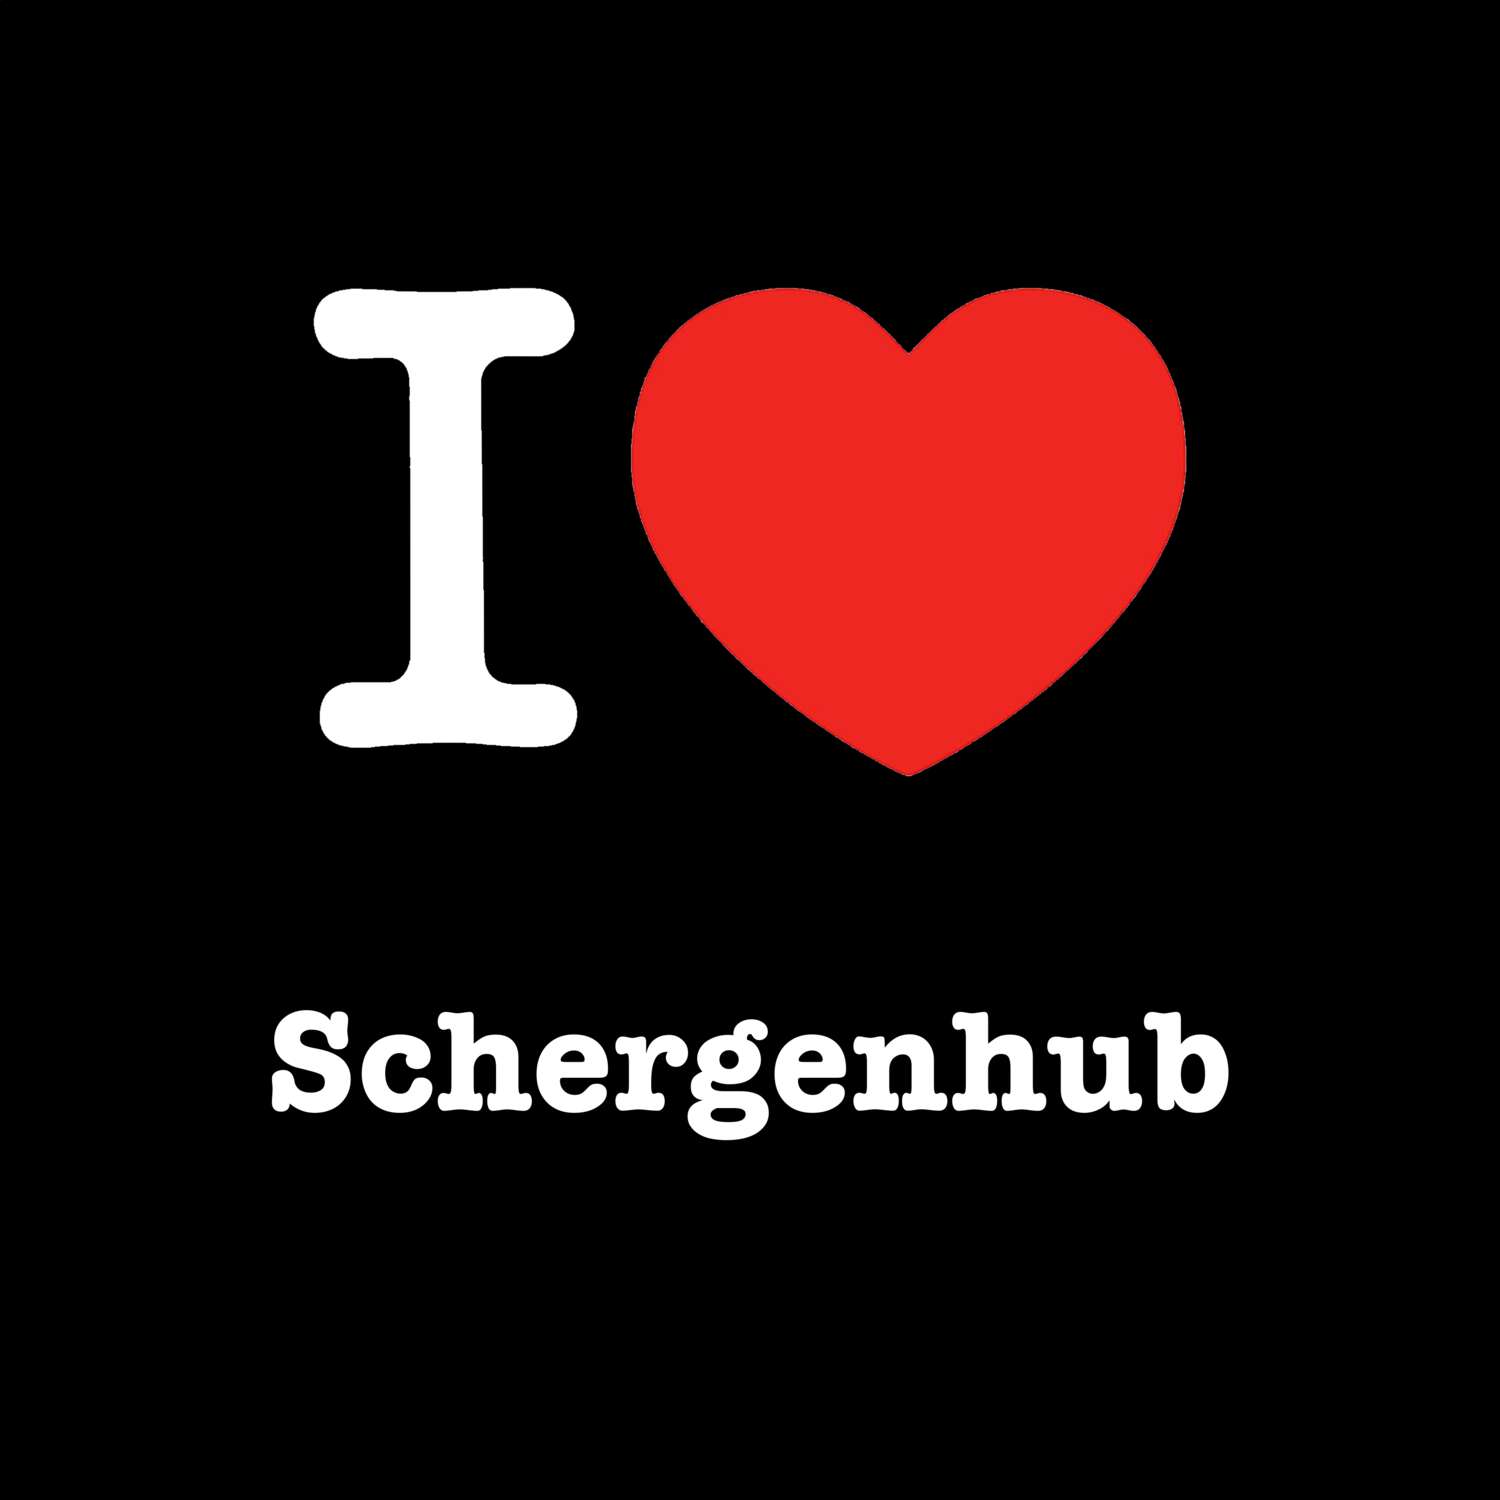 Schergenhub T-Shirt »I love«